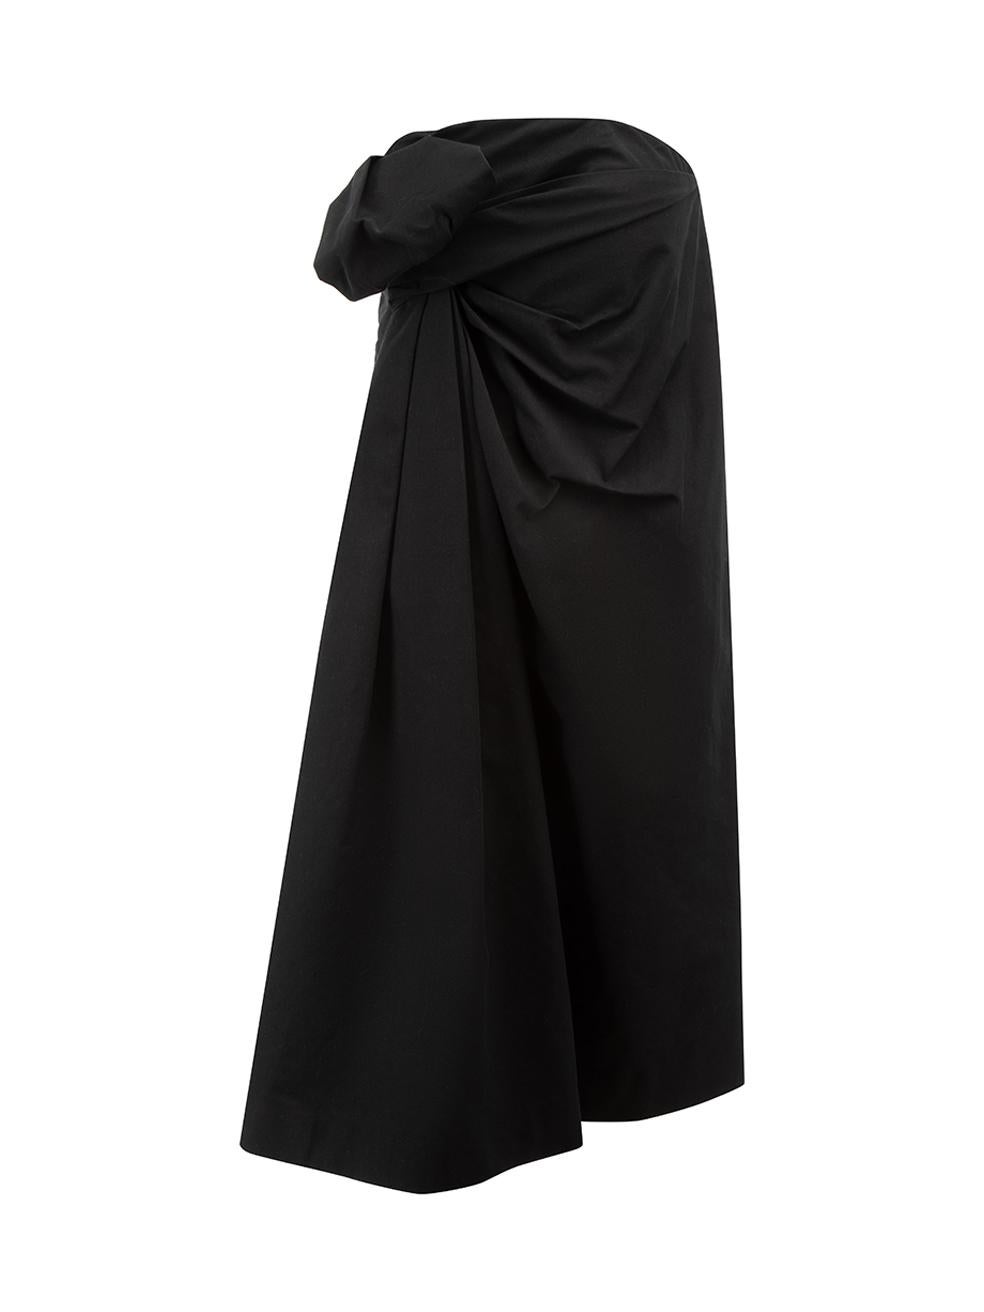 Chloé Women's Black Strapless Evening Mini Dress